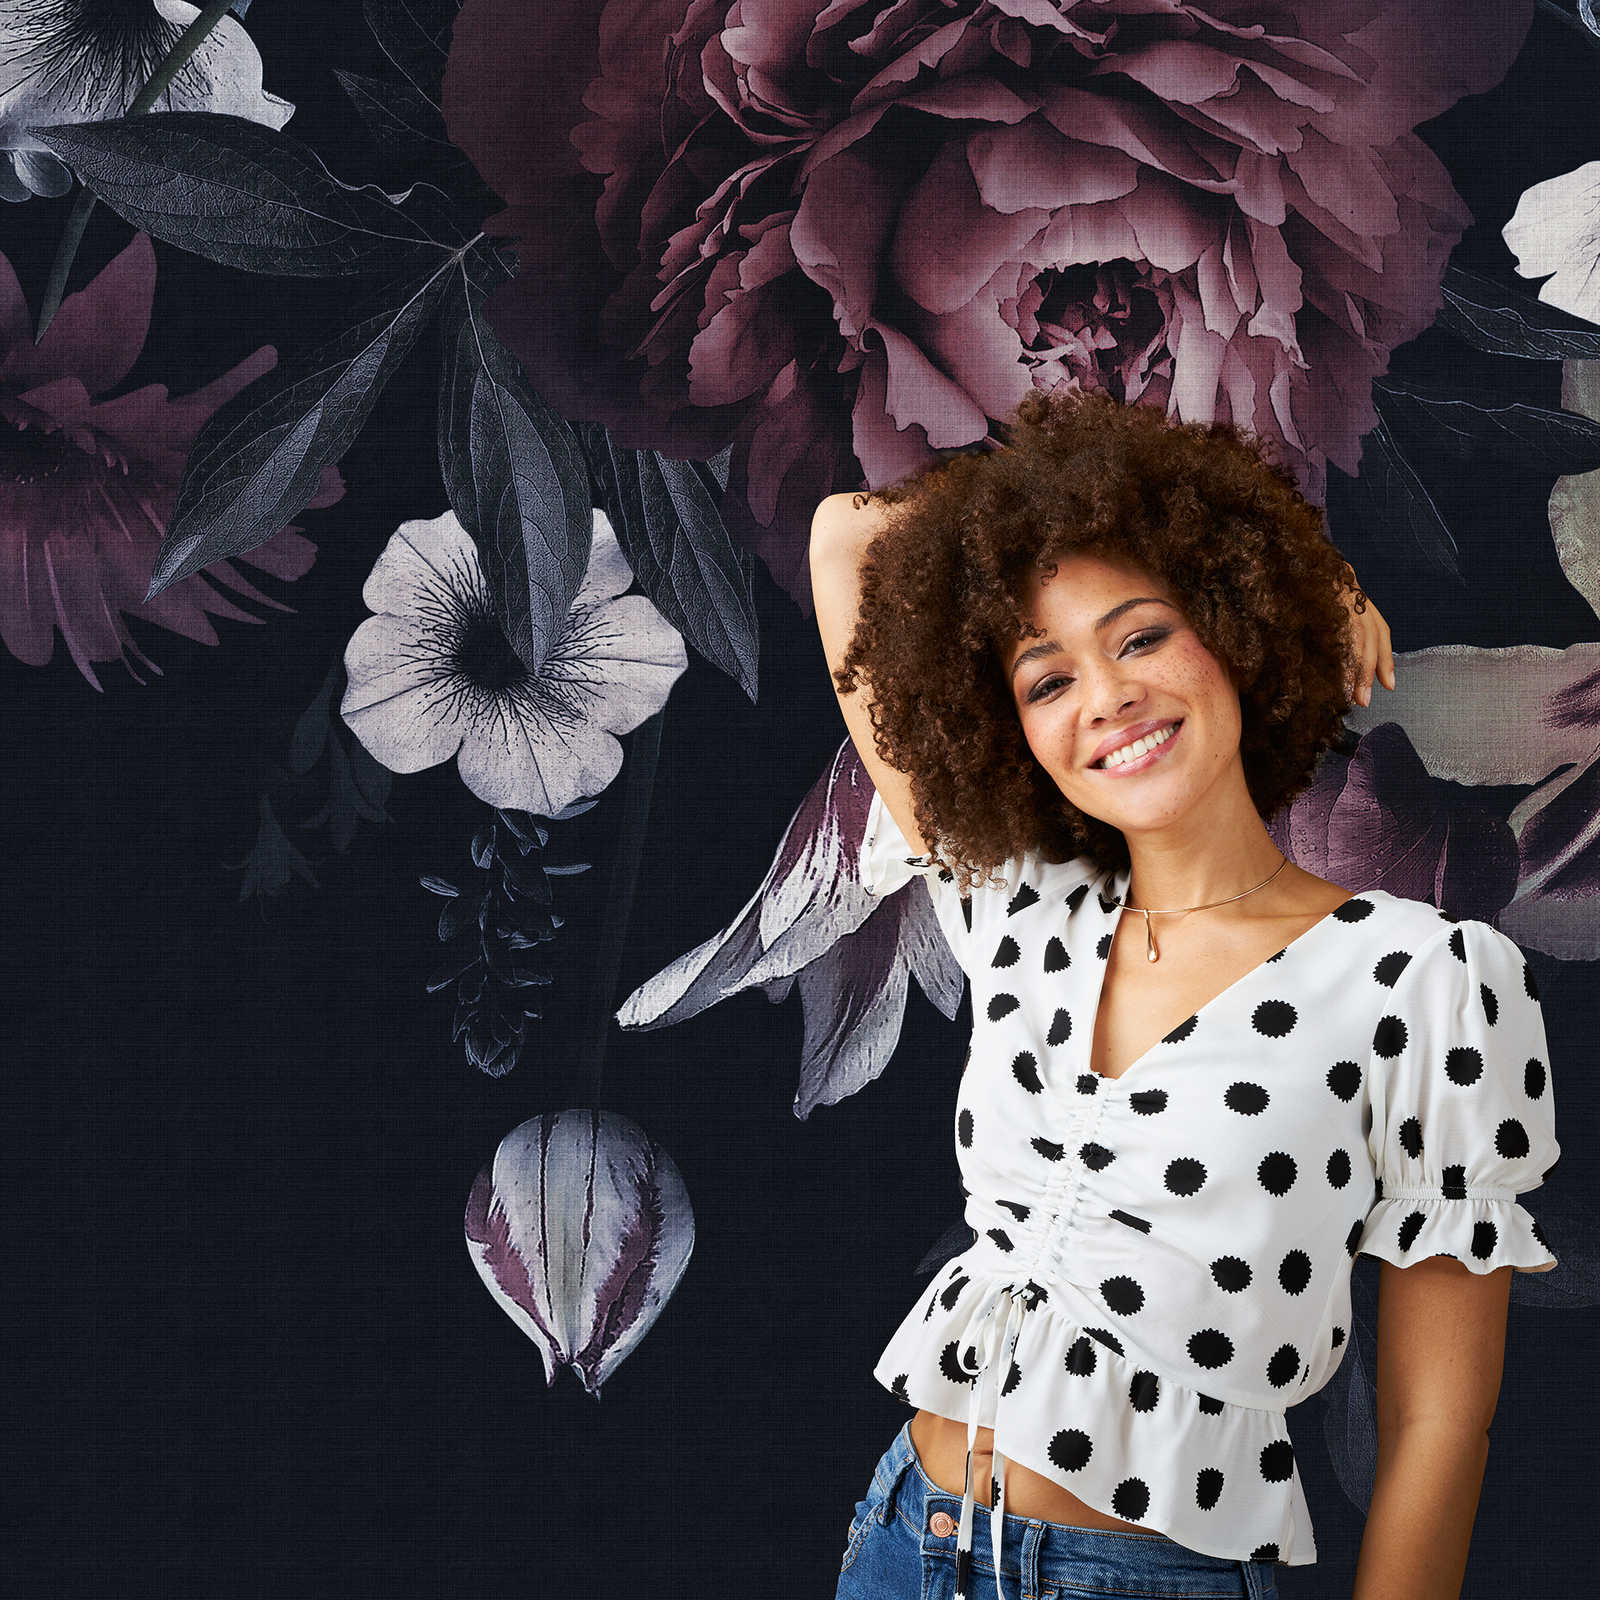 Wallpaper novelty | dark motif wallpaper flowers in painting style
